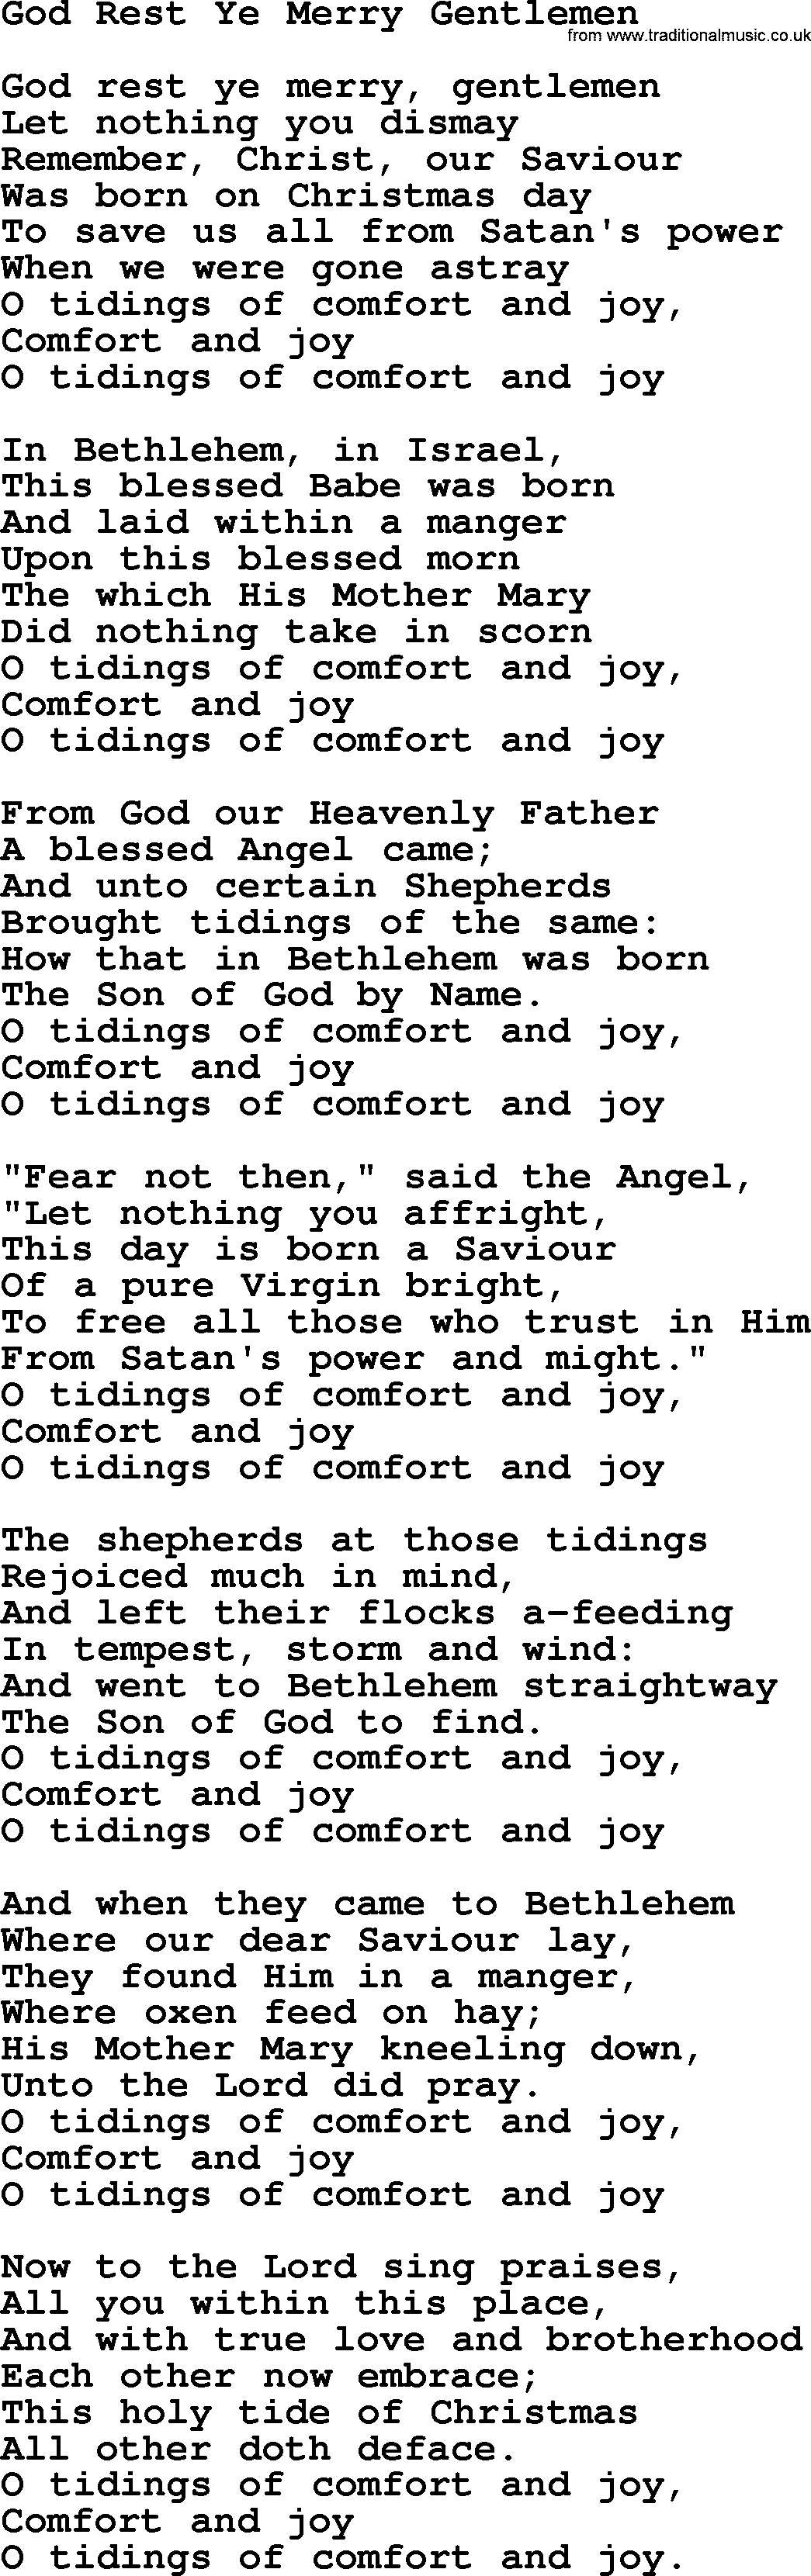 Christmas Hymns, Carols and Songs, title: God Rest Ye Merry, Gentlemen, lyrics with PDF